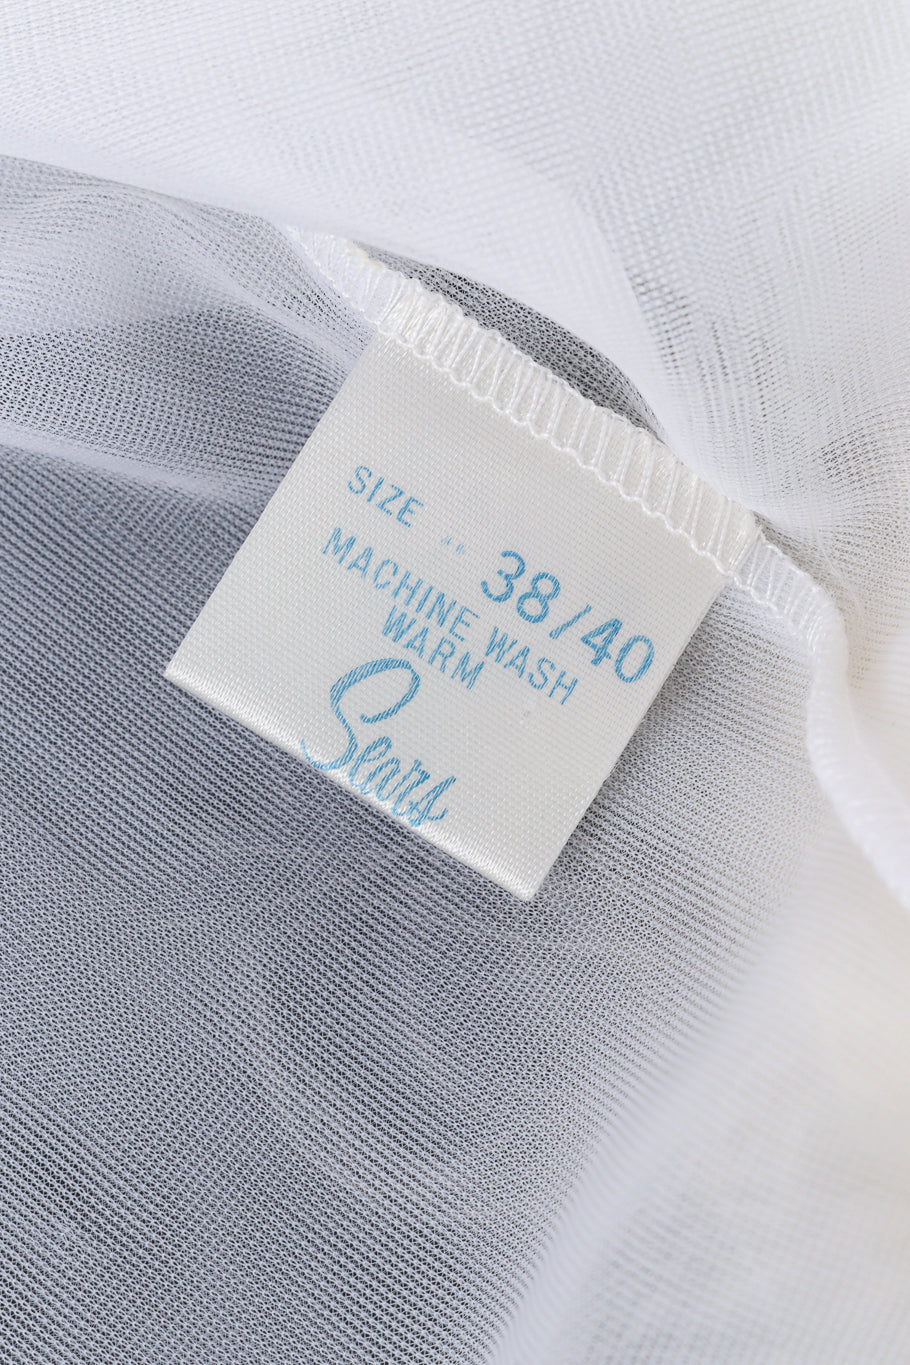 Vintage Sears Marabou Trim Robe & Nightgown Set robe signature label @recess la